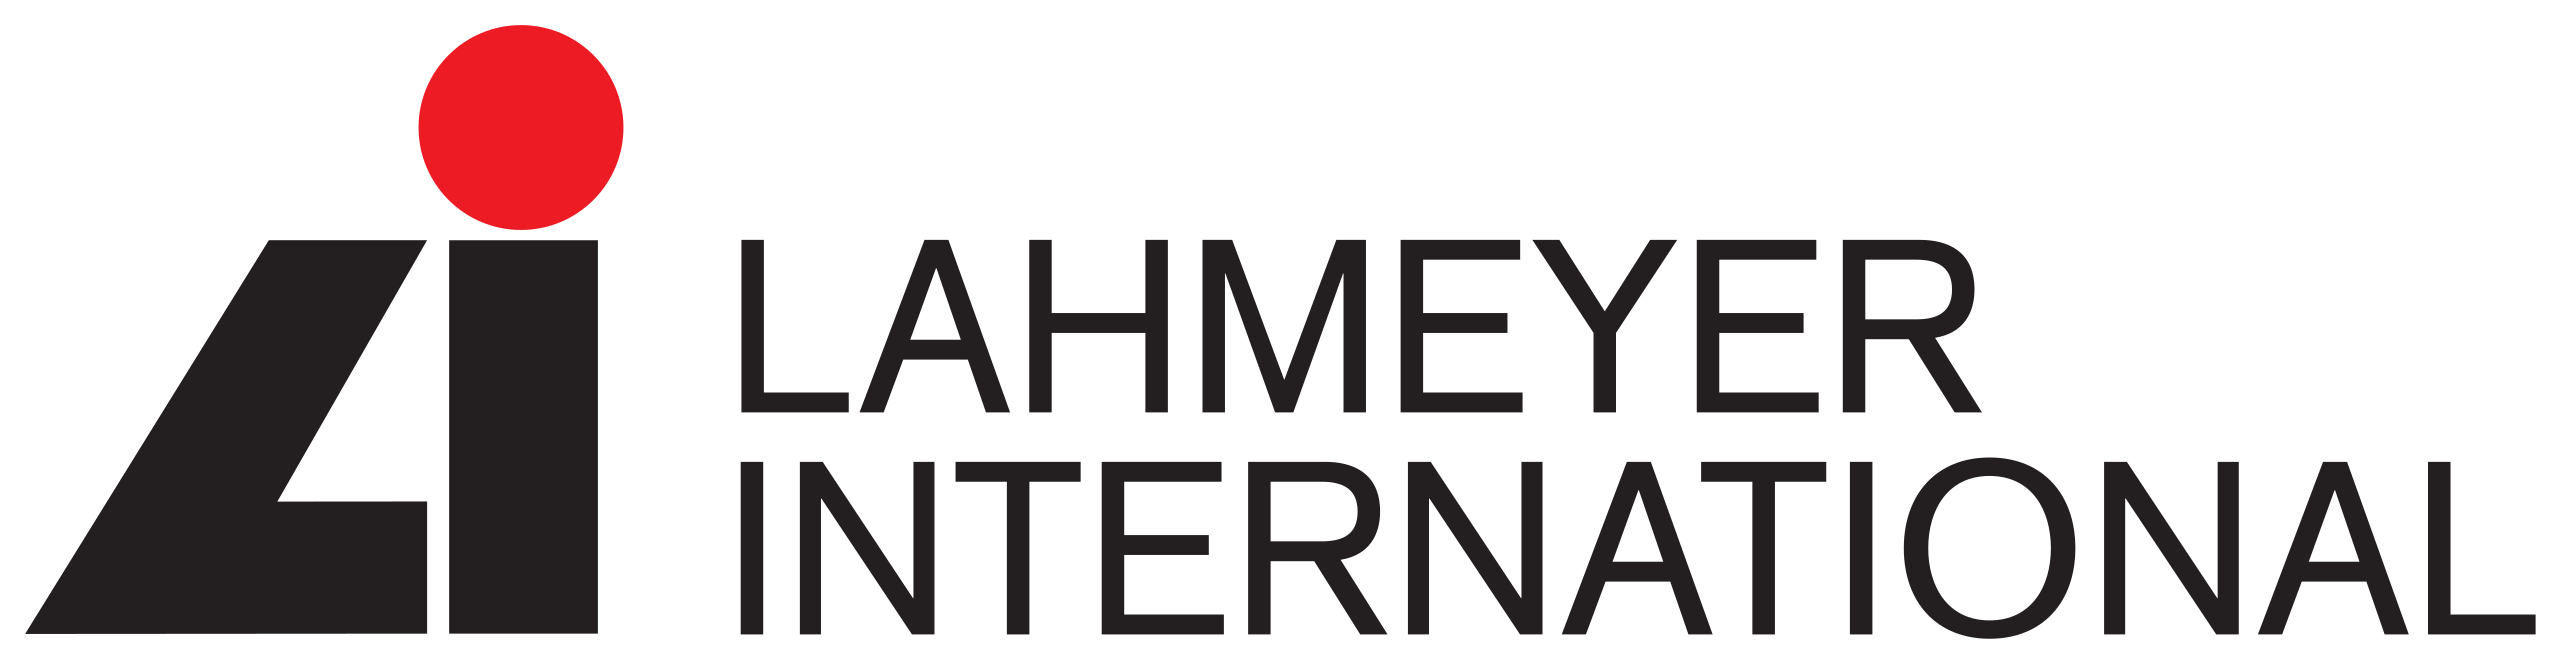 Lahmeyer International logo